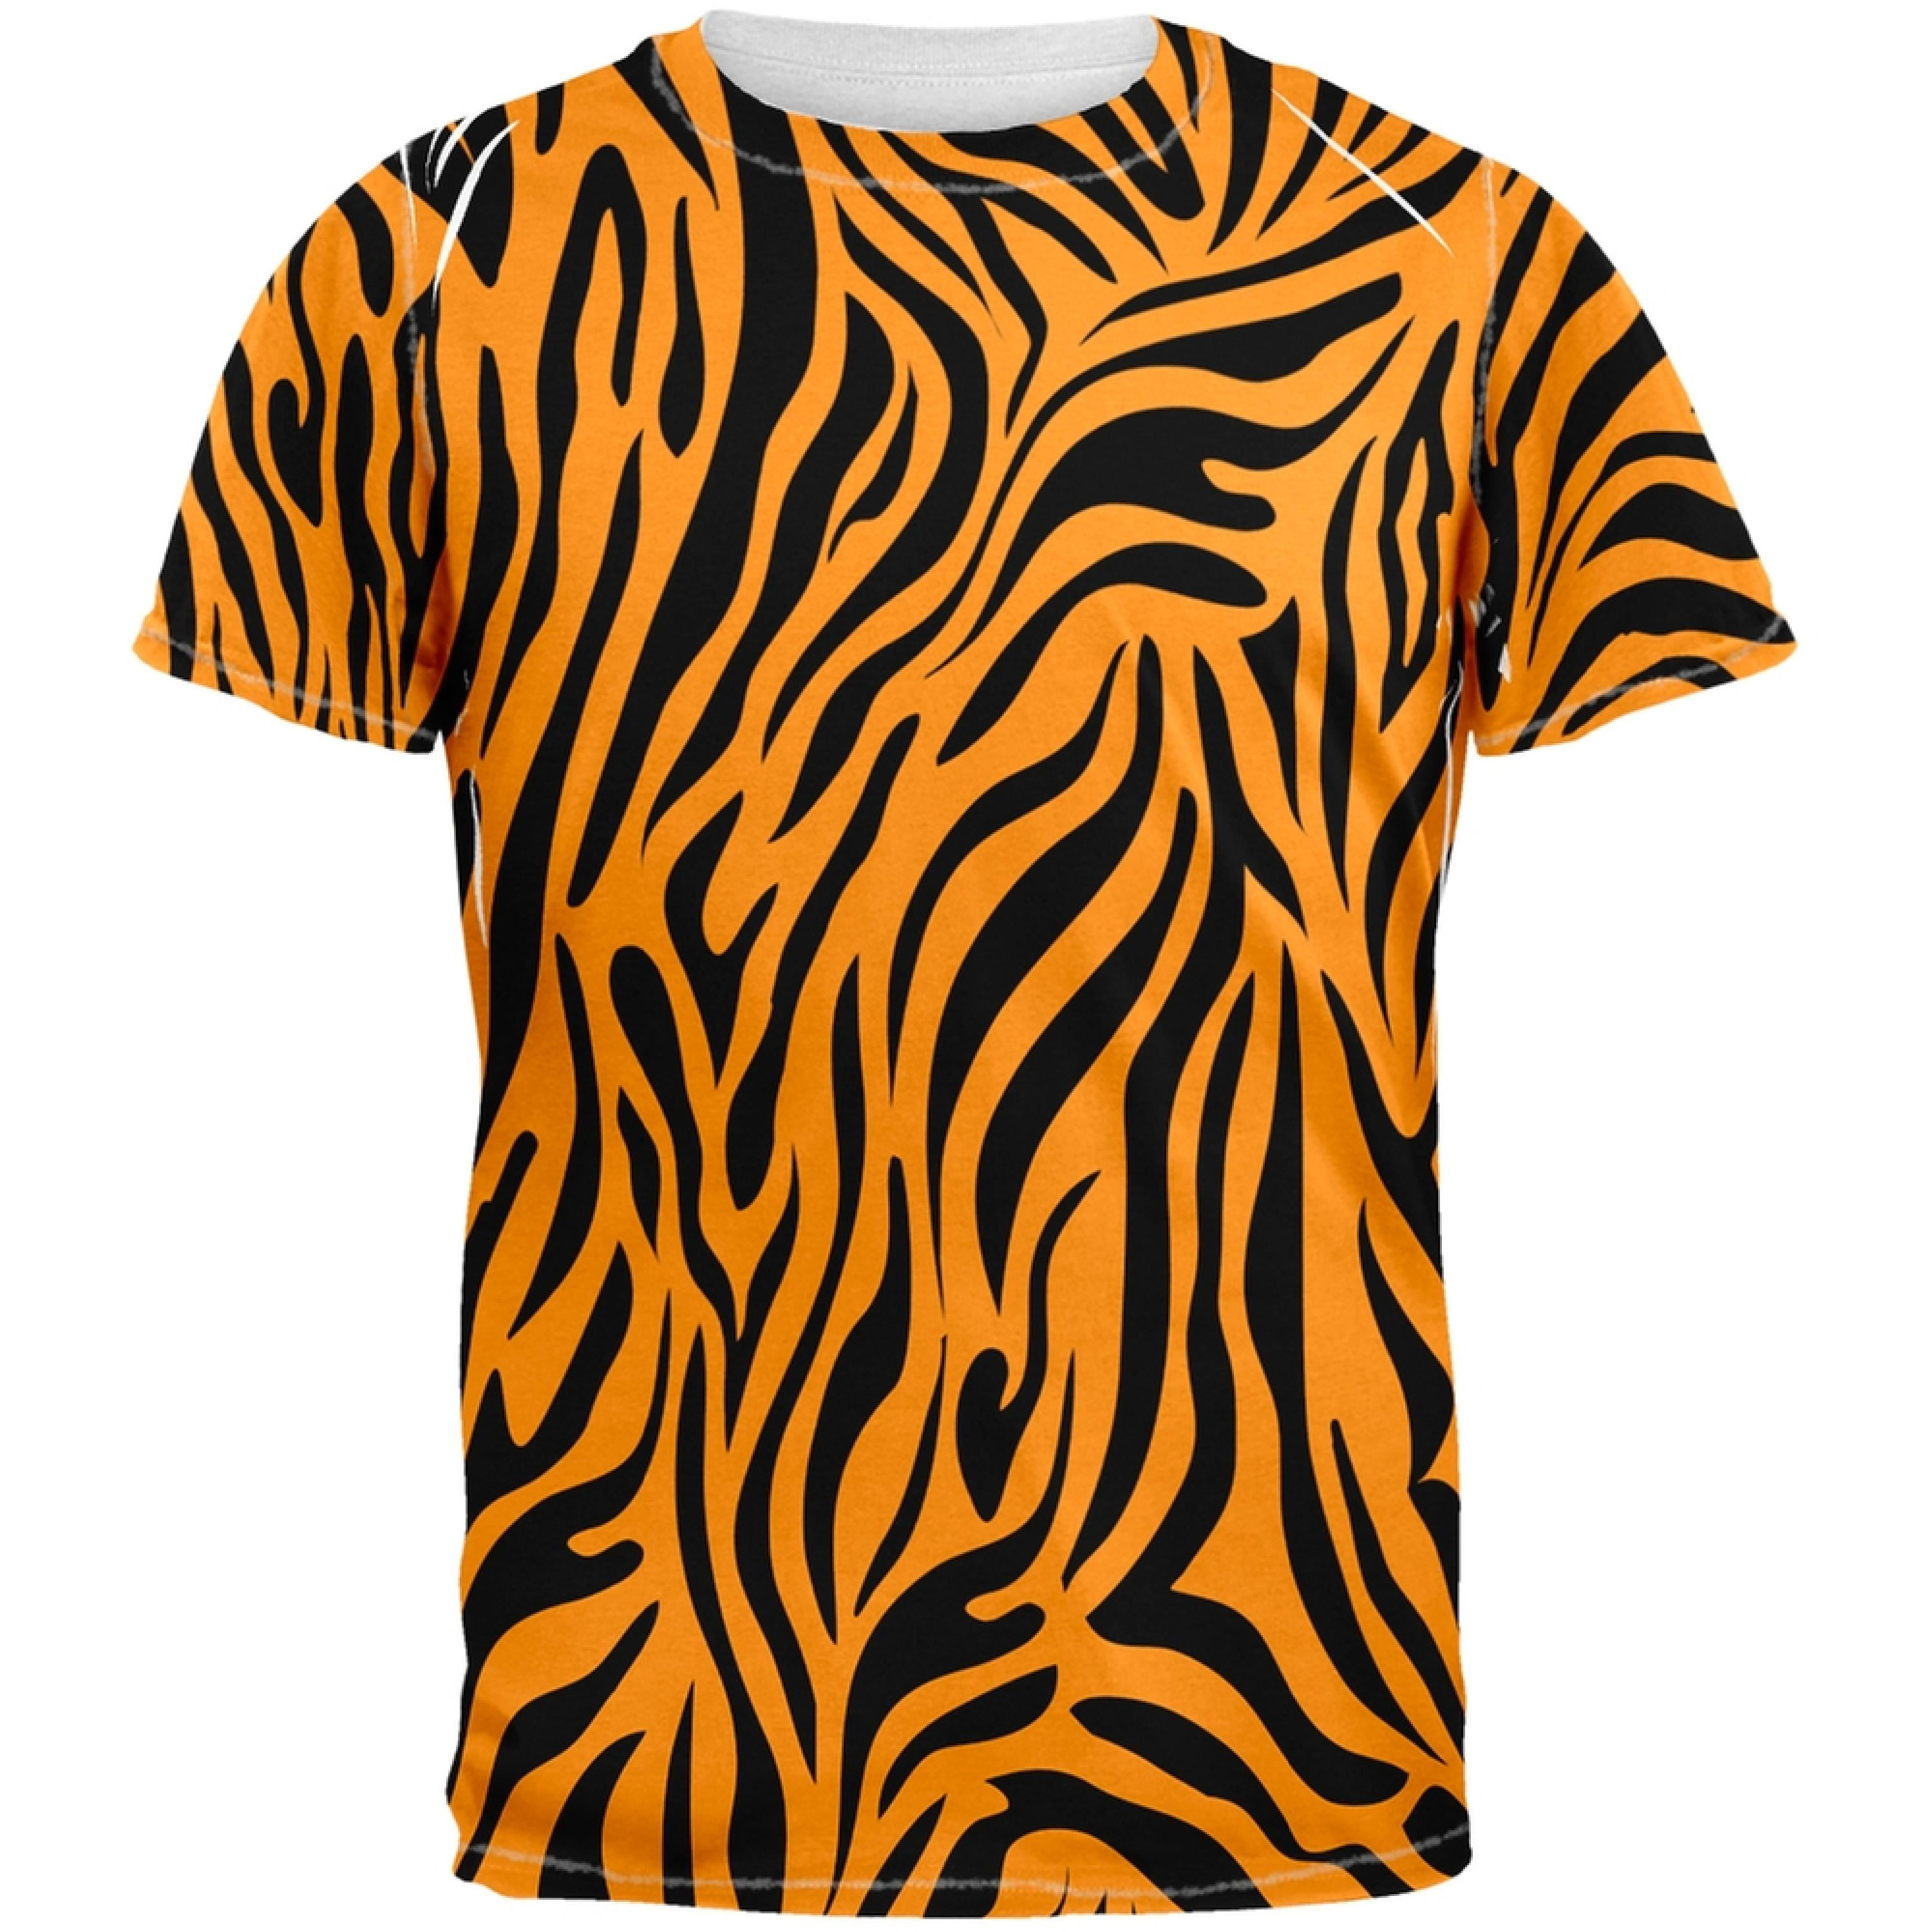 Tee's Plus - Zebra Print Orange Sublimated Adult T-Shirt - X-Large